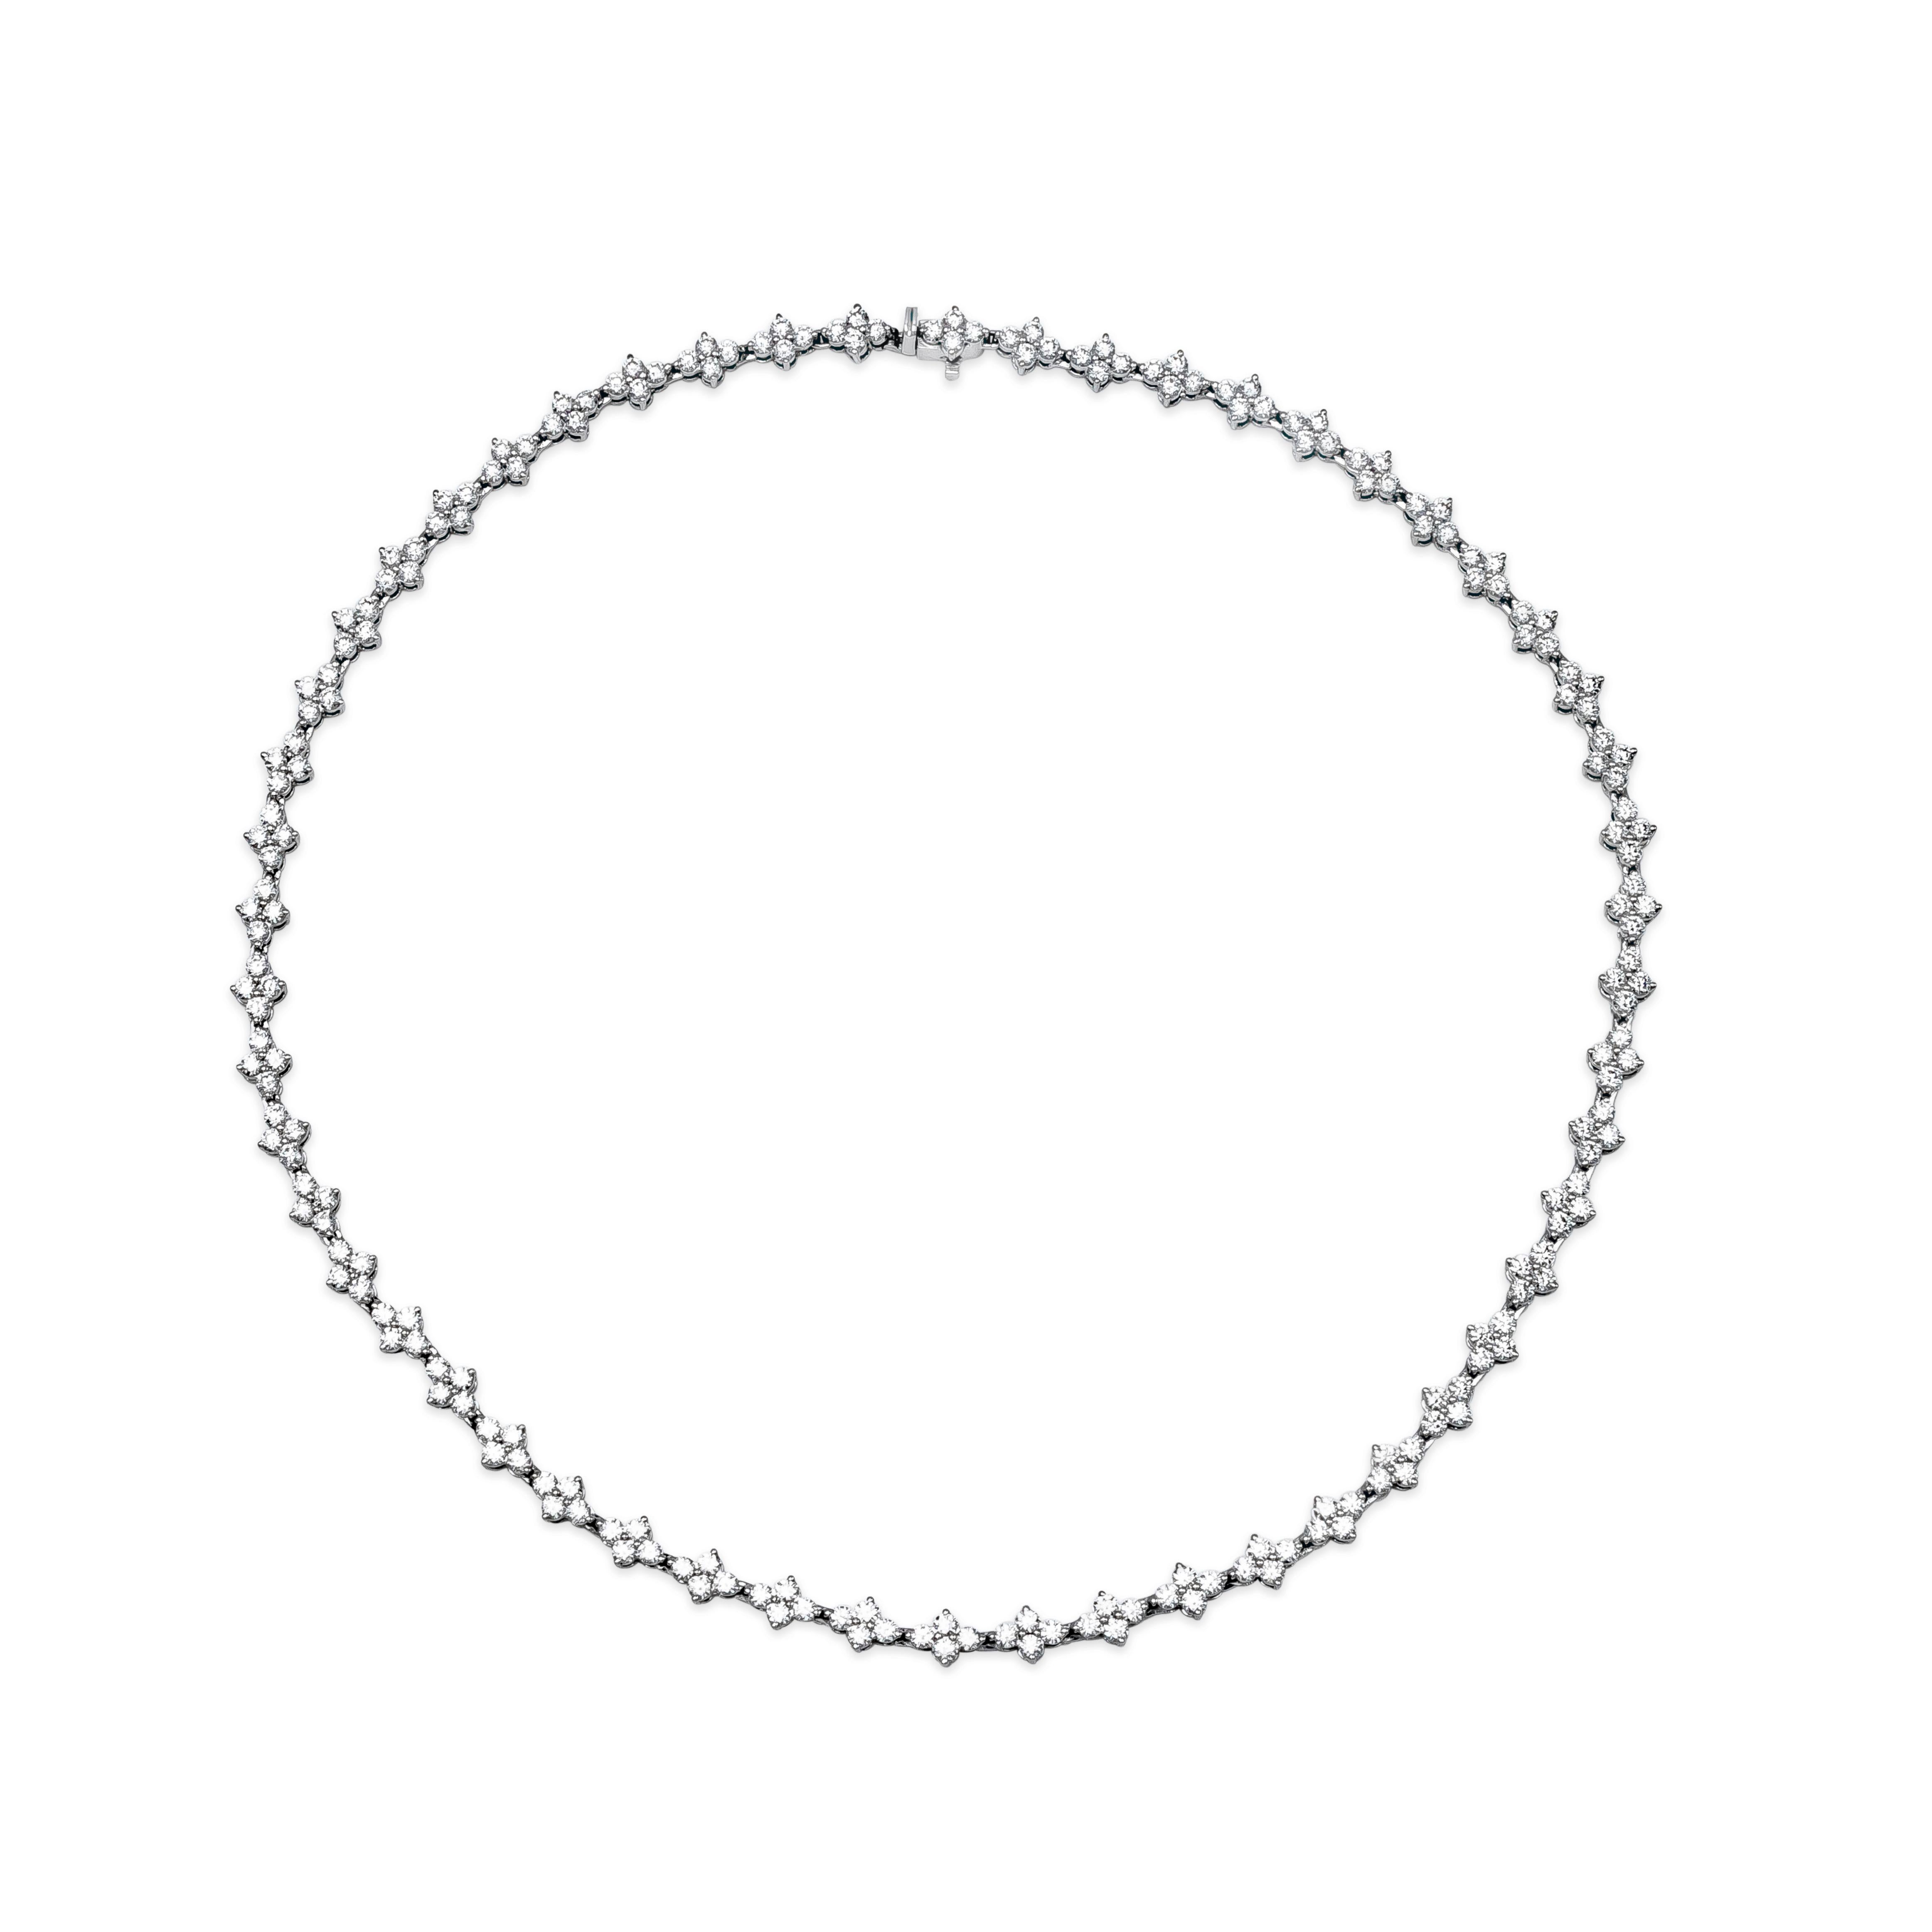 Contemporary Roman Malakov 9.59 Carat Cluster Diamond Tennis Necklace in White Gold For Sale